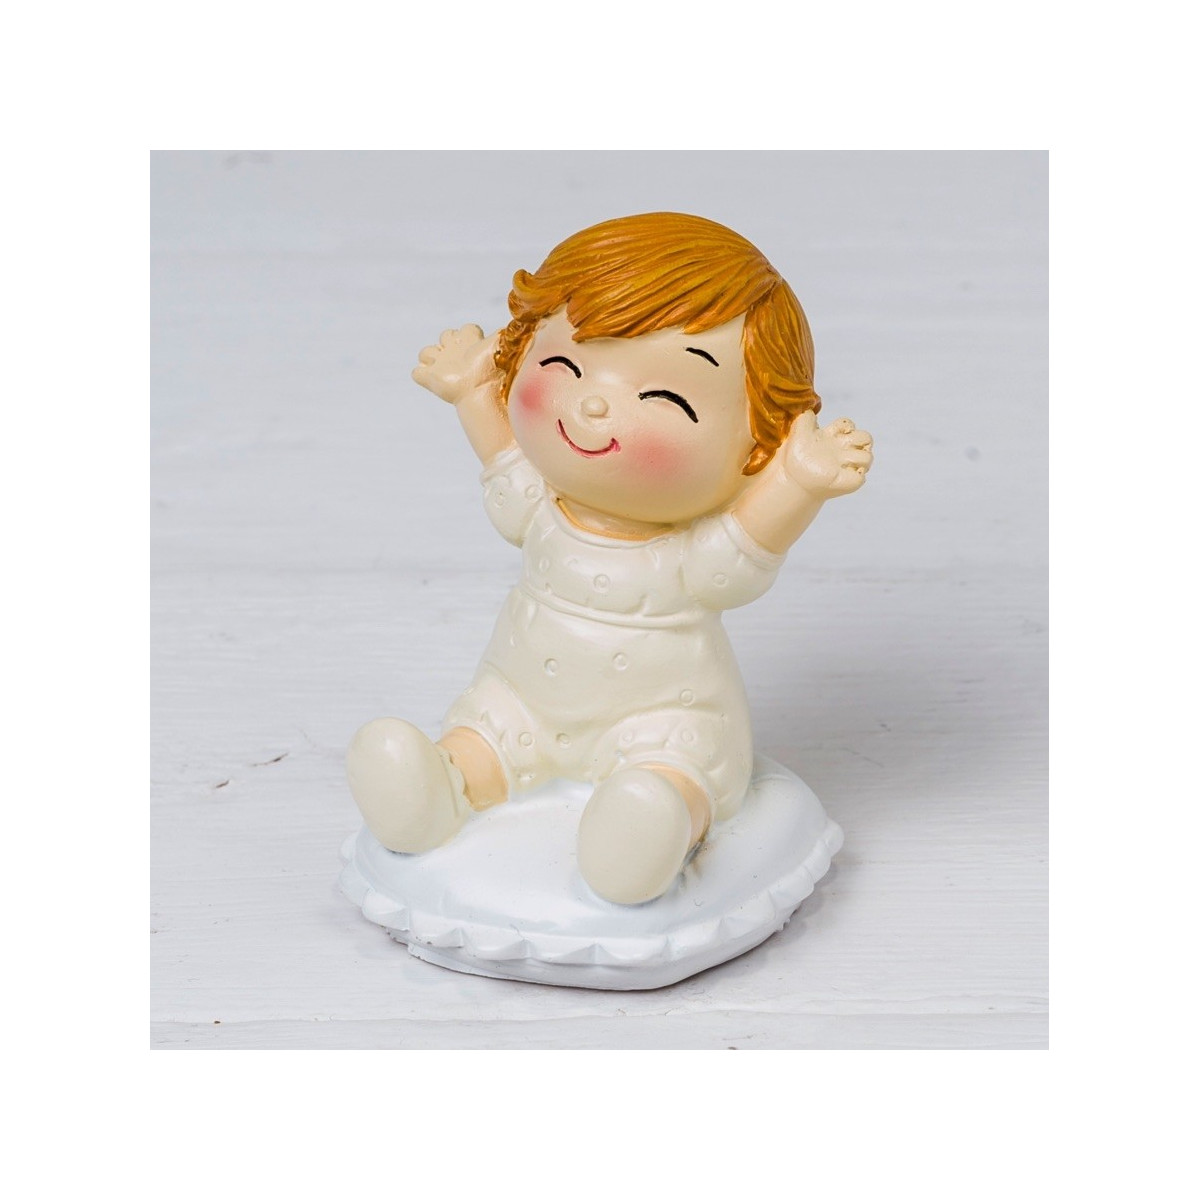 Figura bebé pop &fun sentado en cojín para tarta de bautizo barata